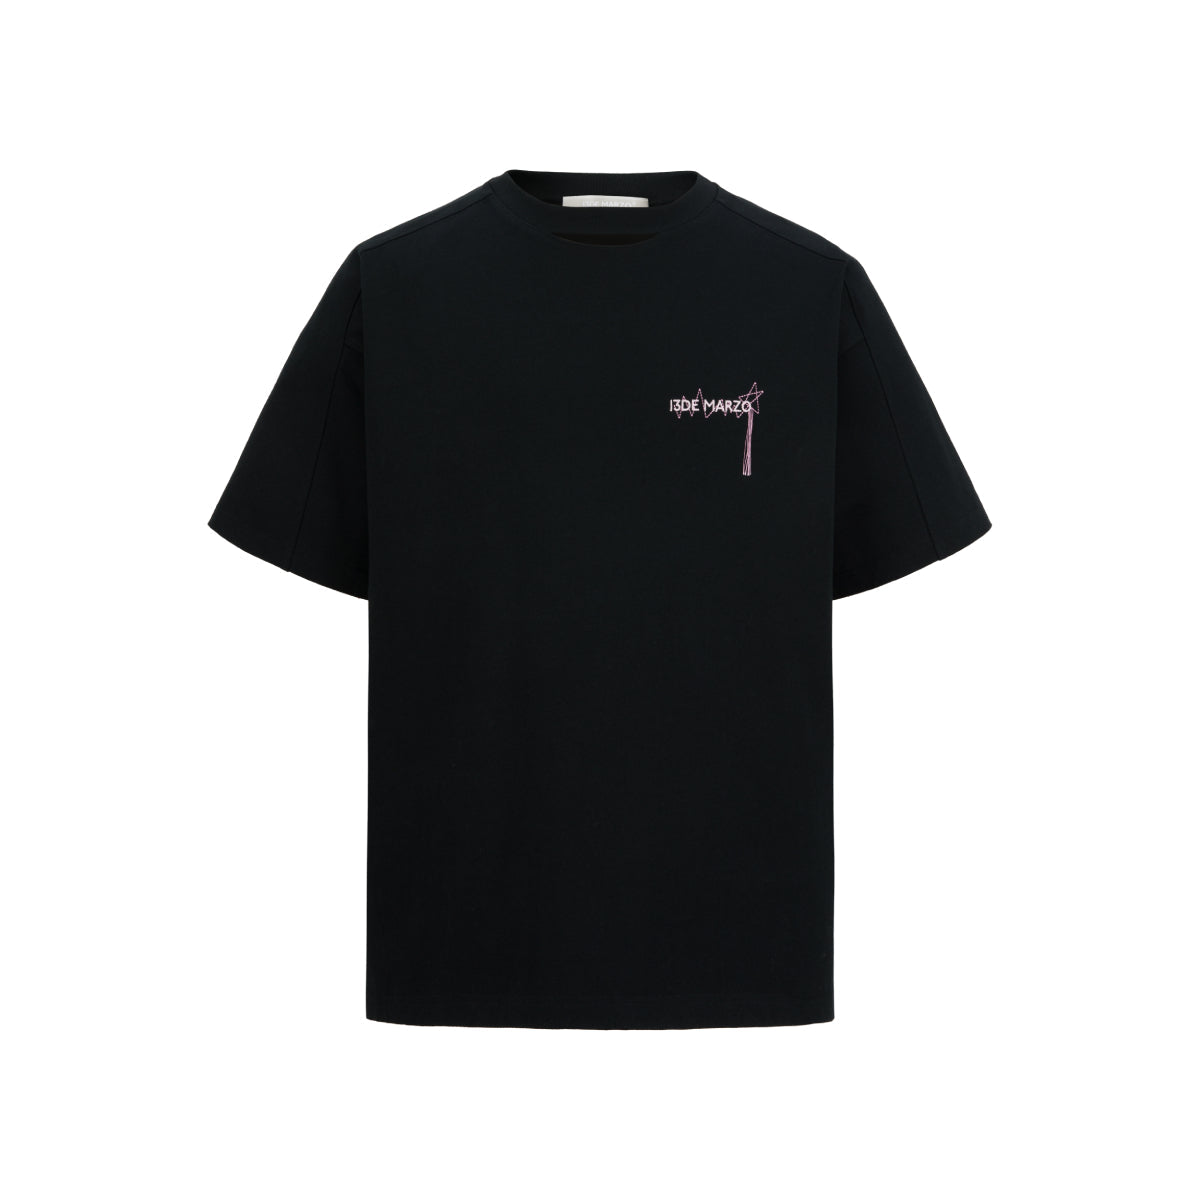 13DE MARZO Doozoo Logo Colored  Line T-Shirt Black